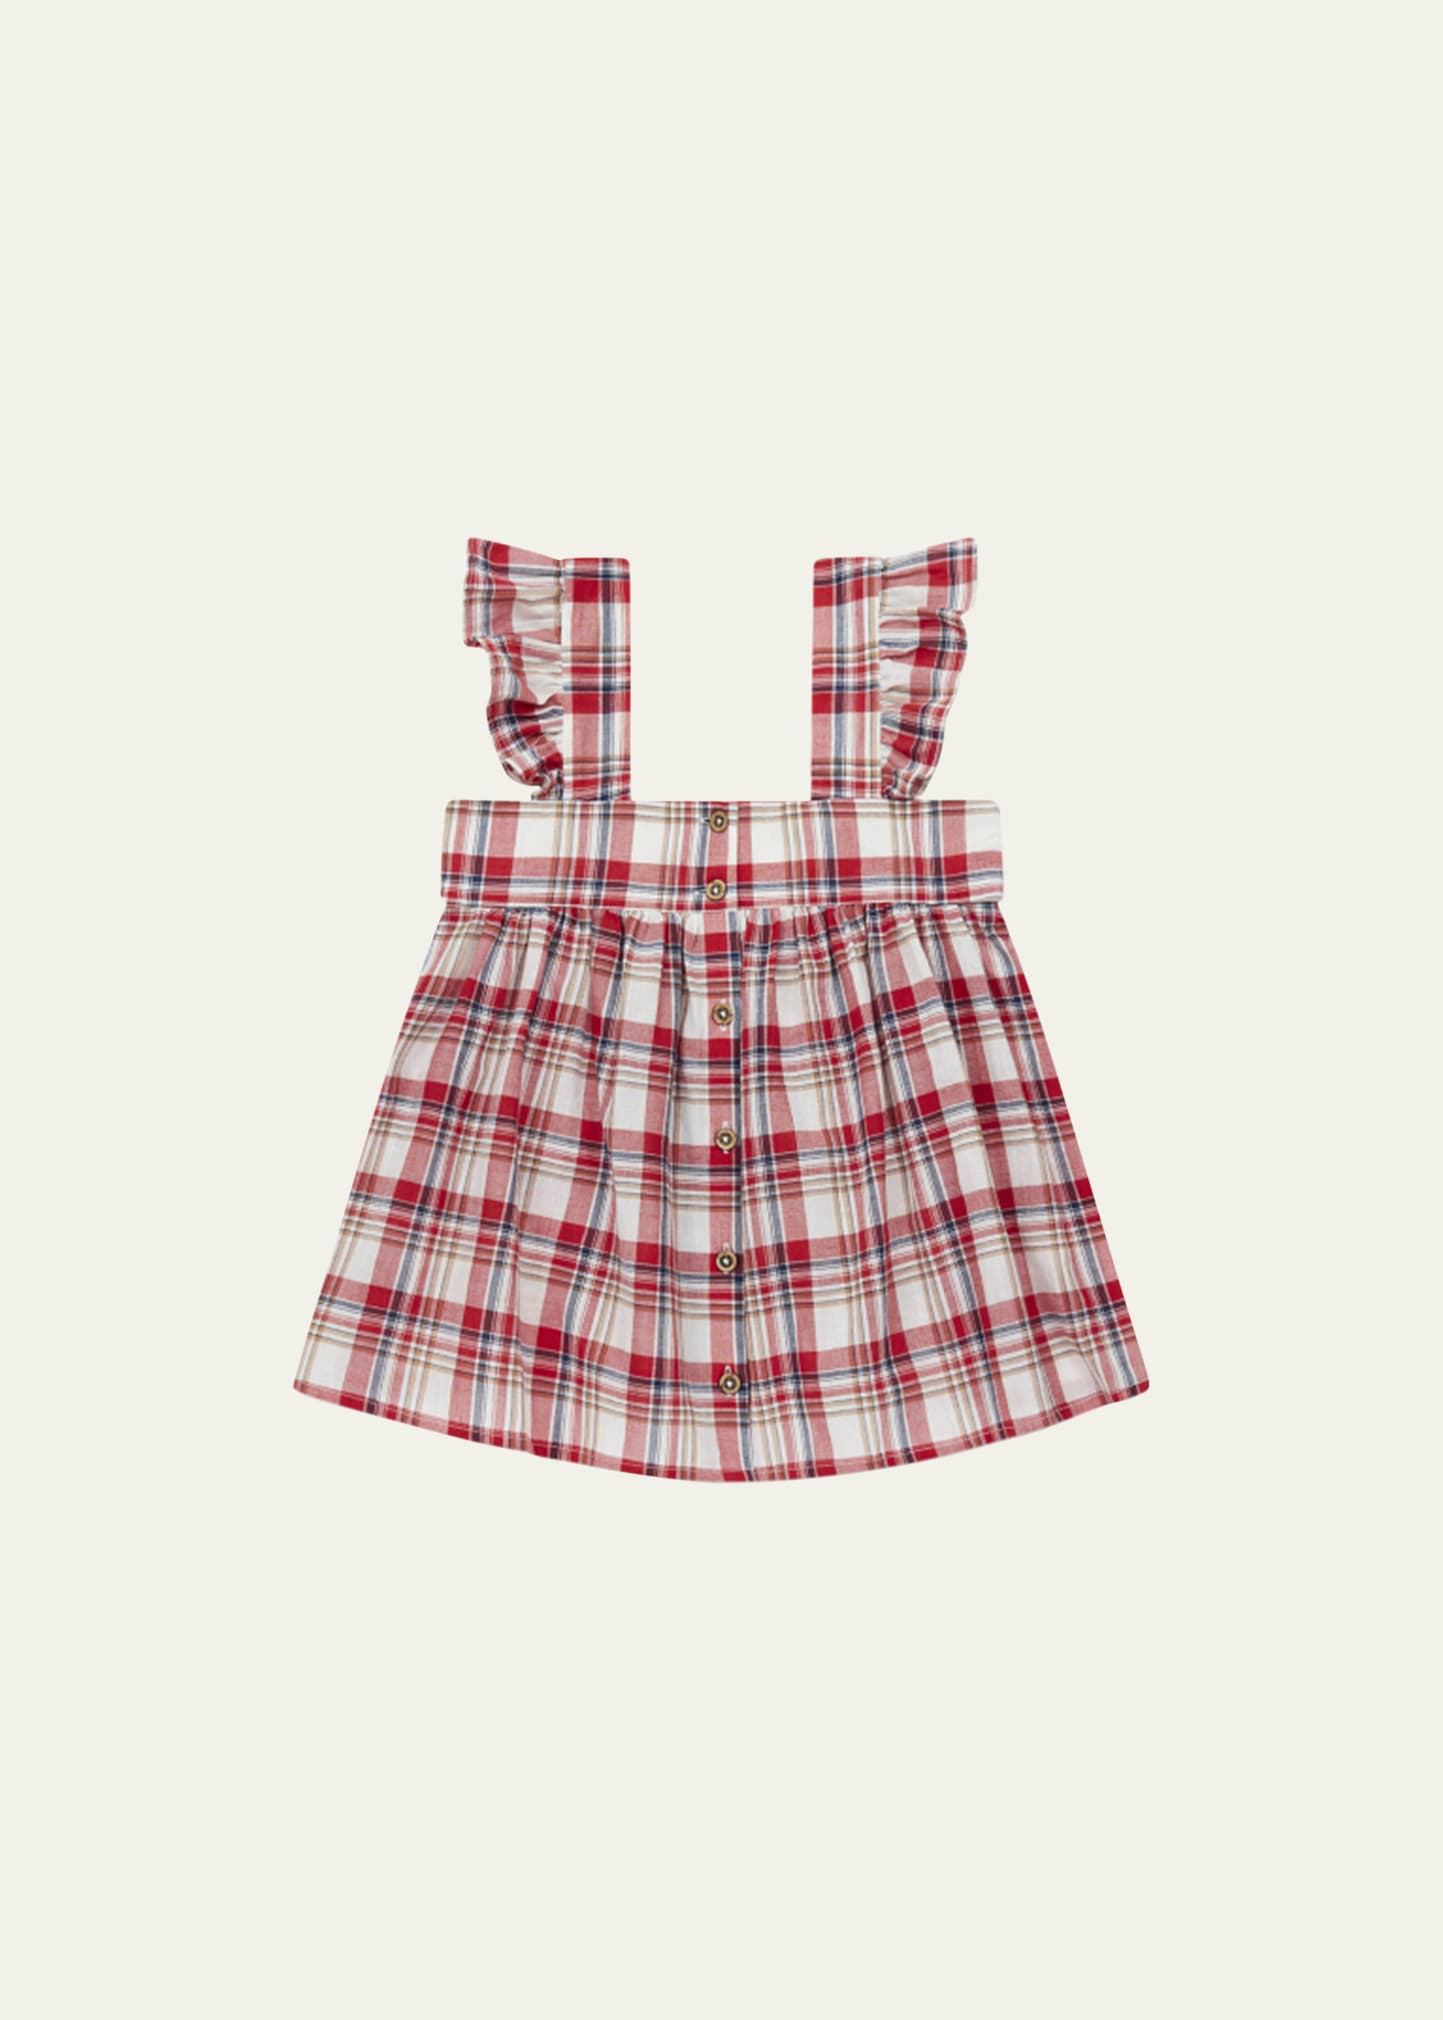 Bonton Girl's Plaid-Print Sleeveless Top, Size 4-12